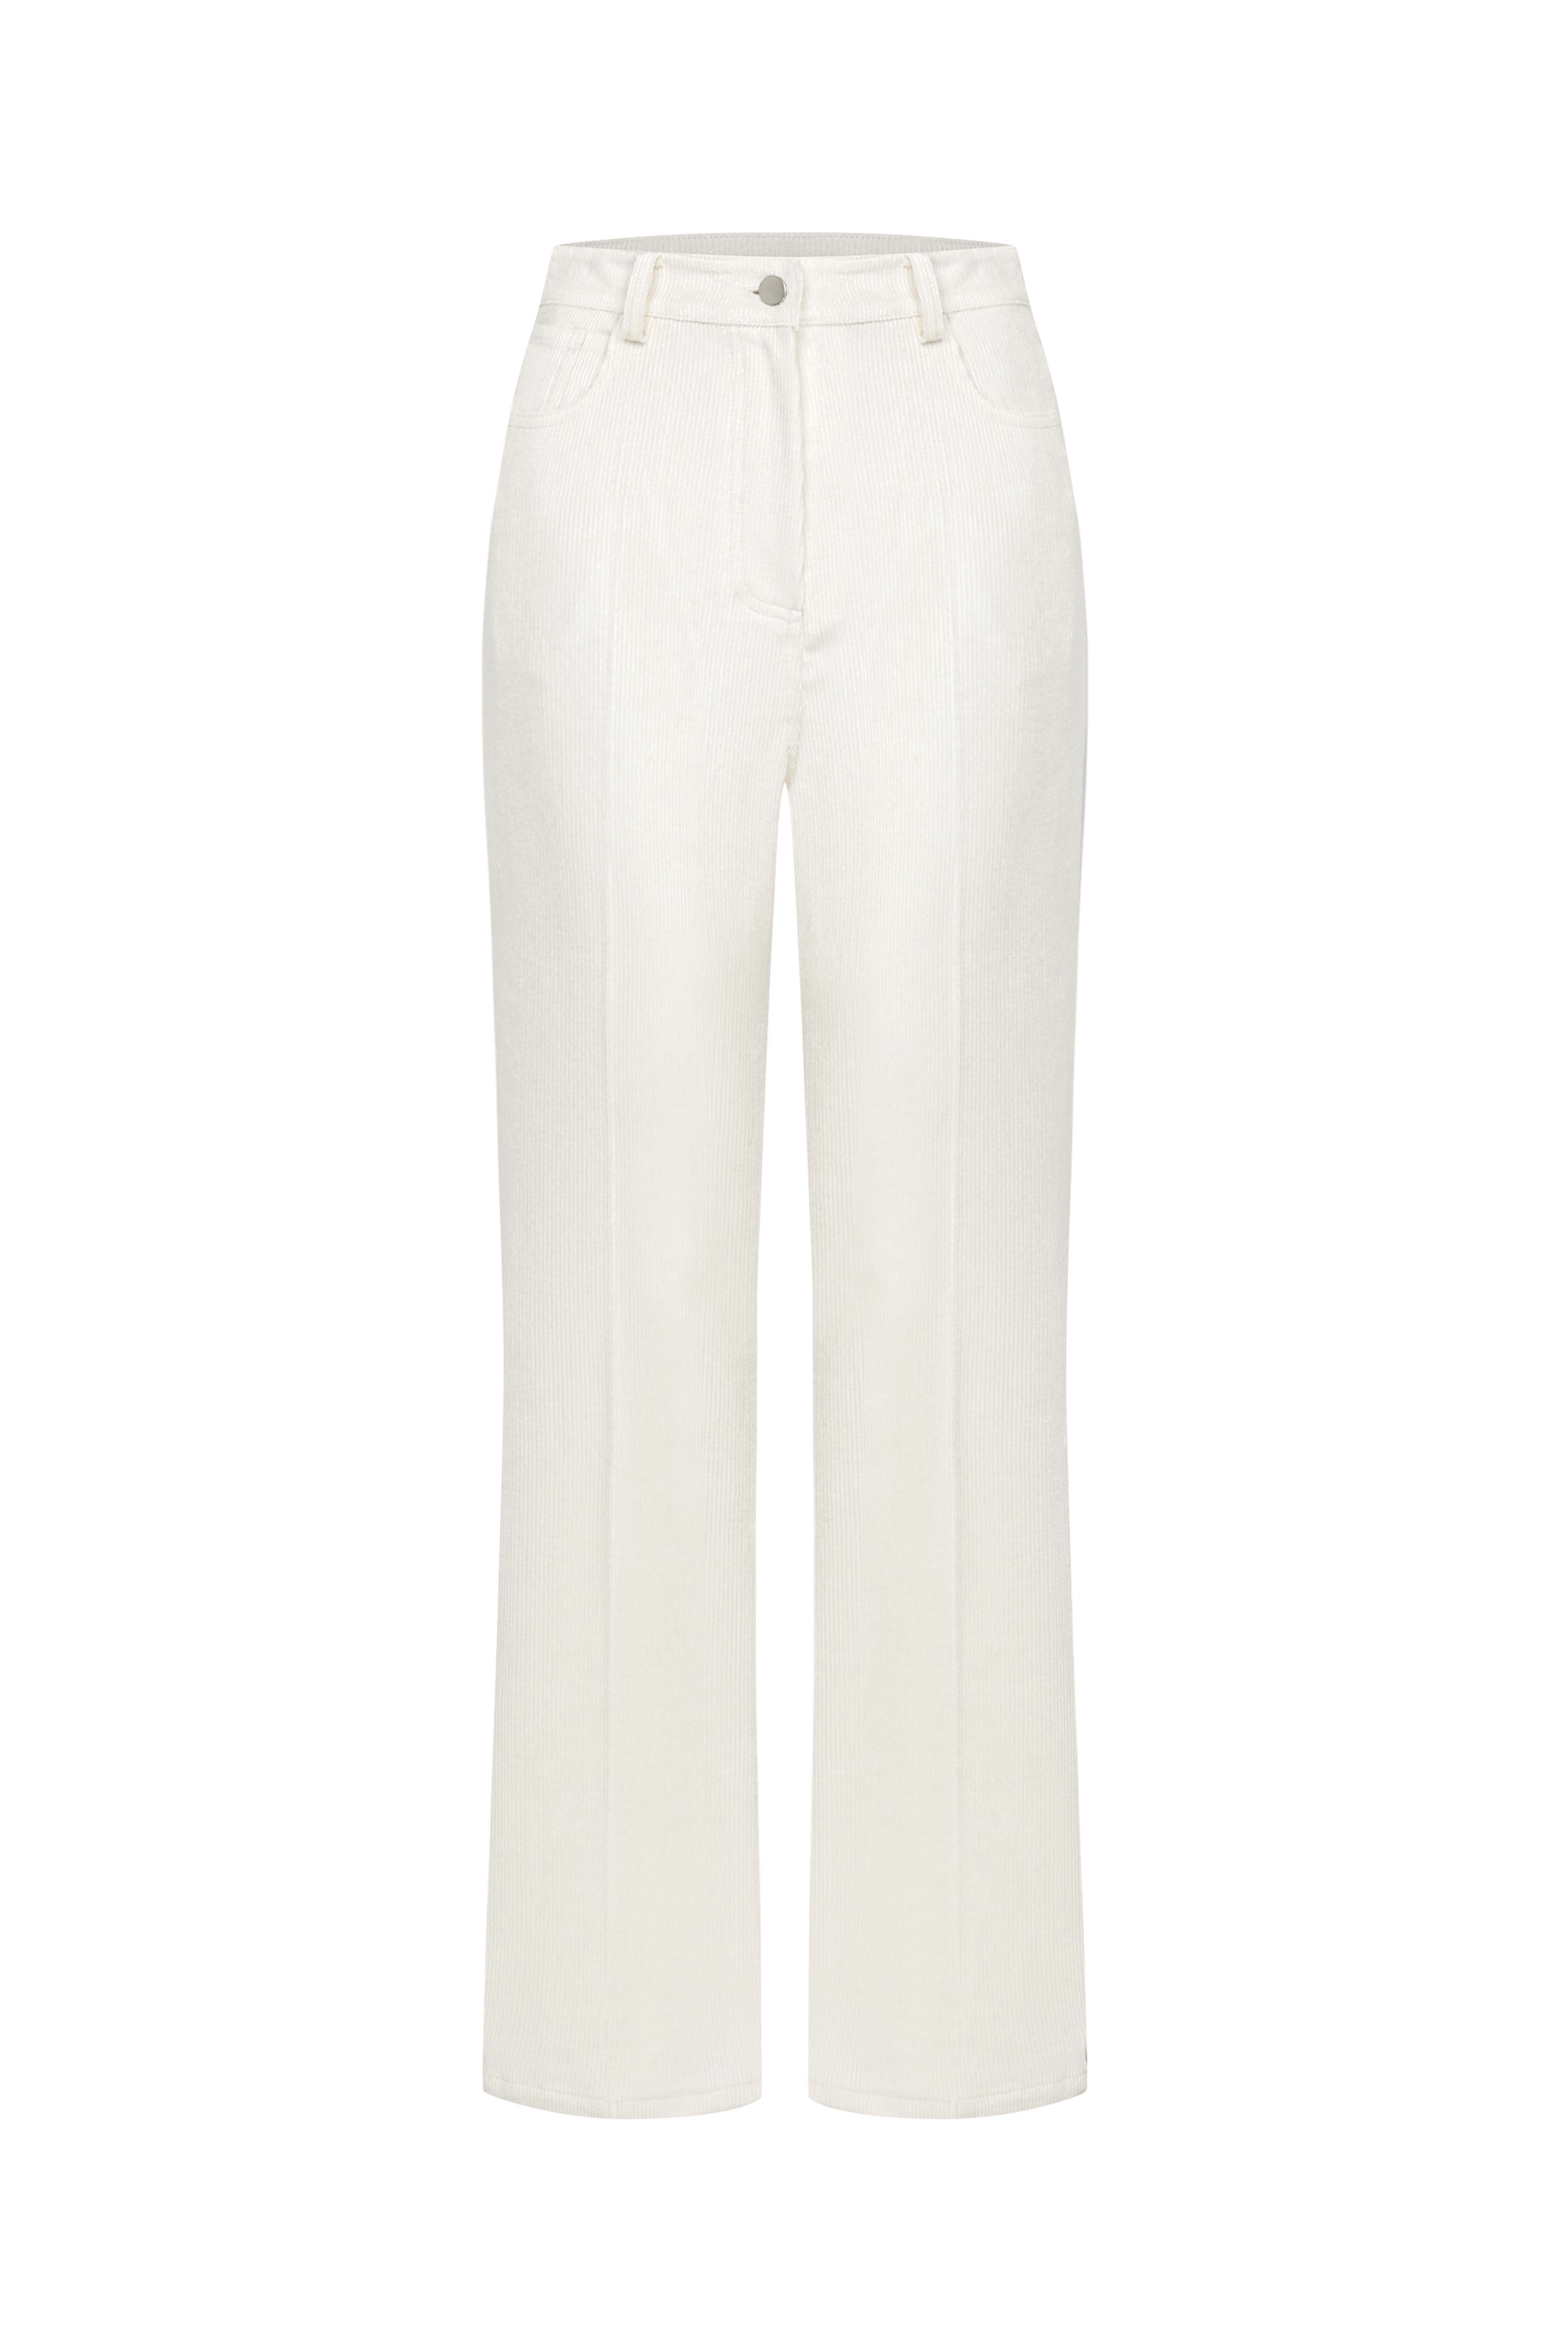 90s Shiny Corduroy Pants (Pearl White) - 포니테일